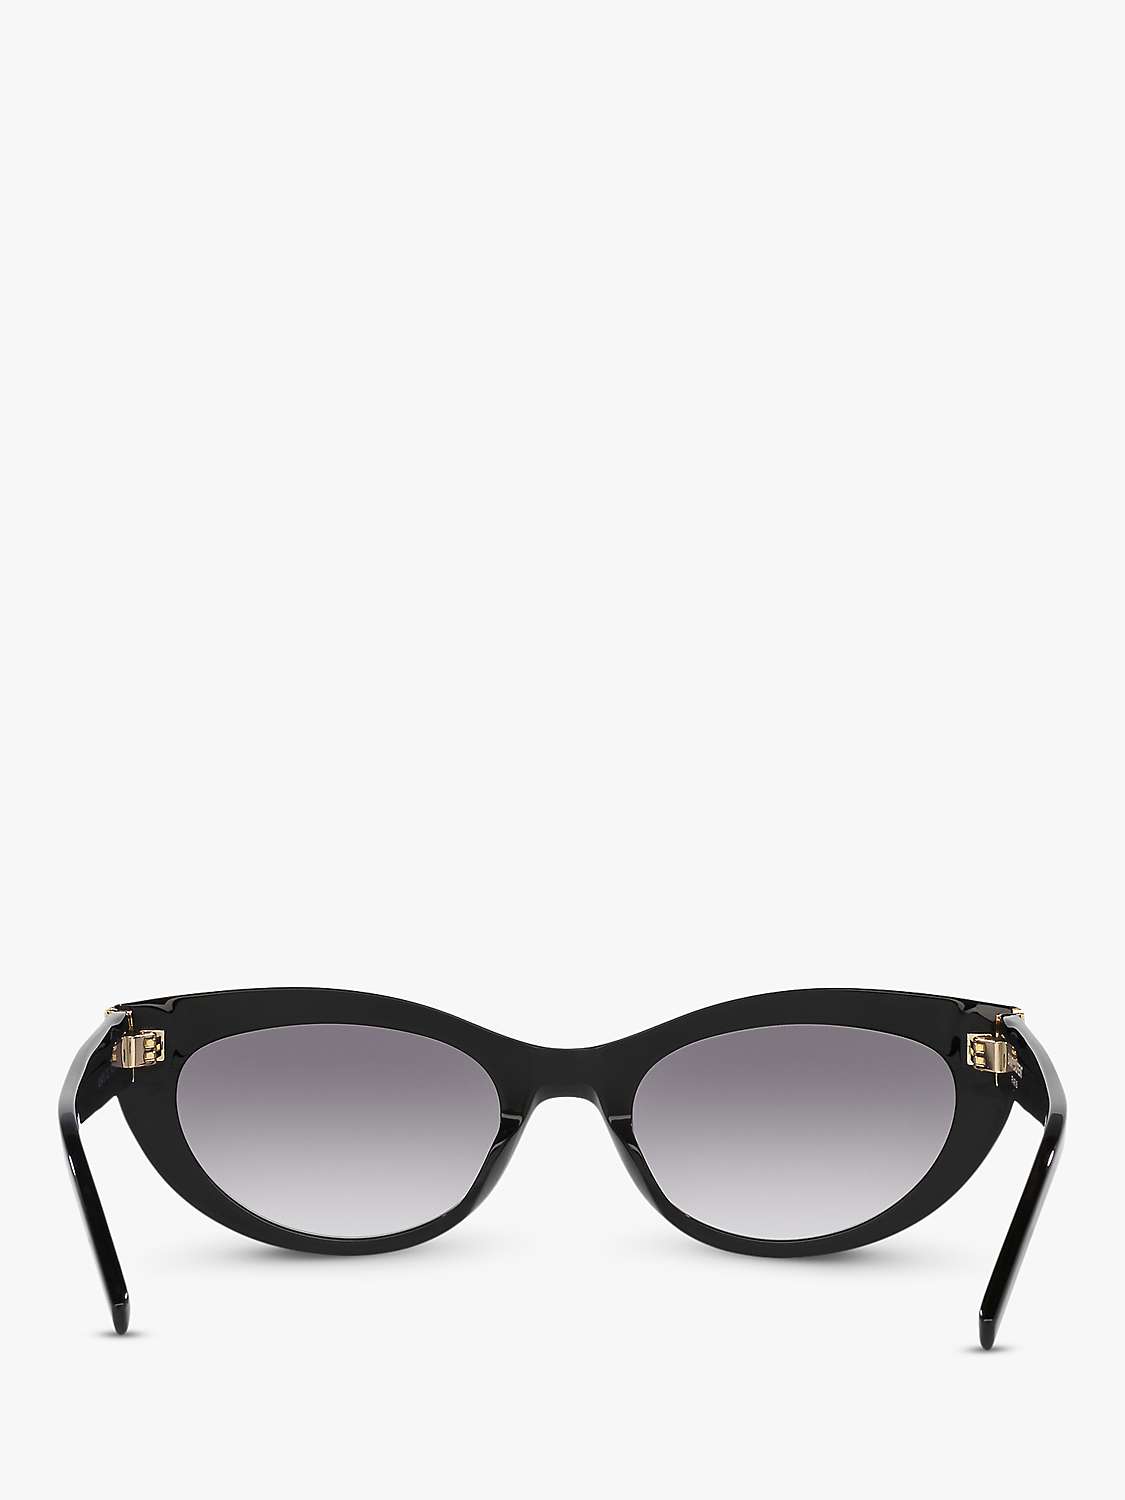 Buy Yves Saint Laurent YS000478 Women's Oval Sunglasses, Black/Grey Online at johnlewis.com